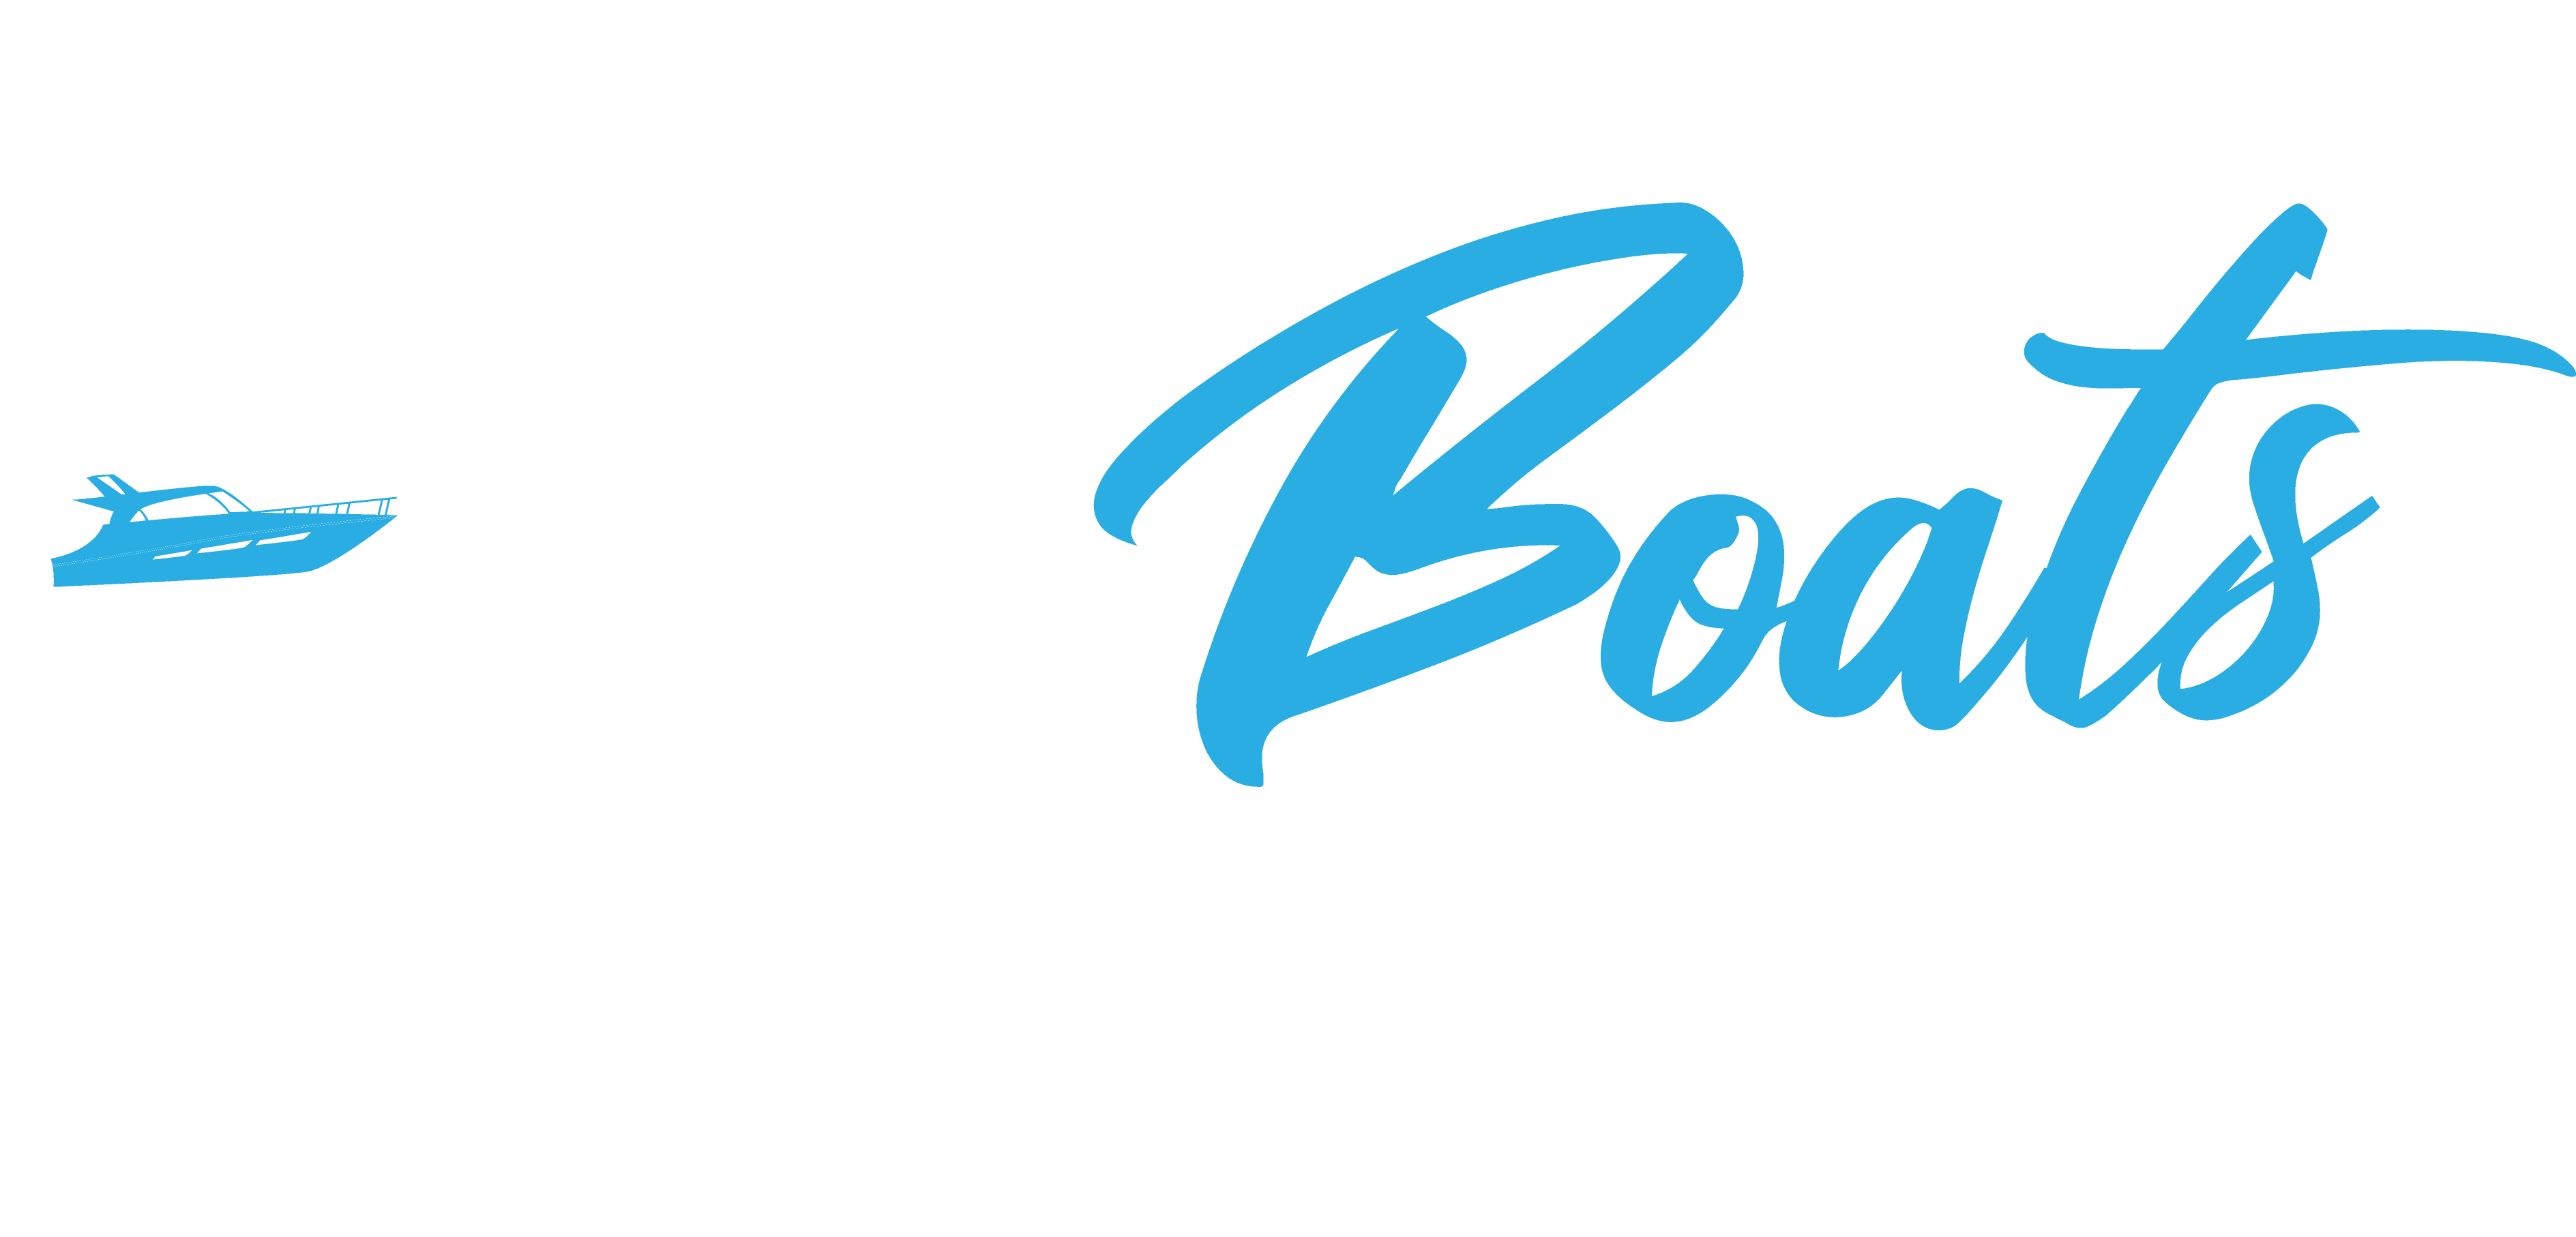 OnlyBoatz